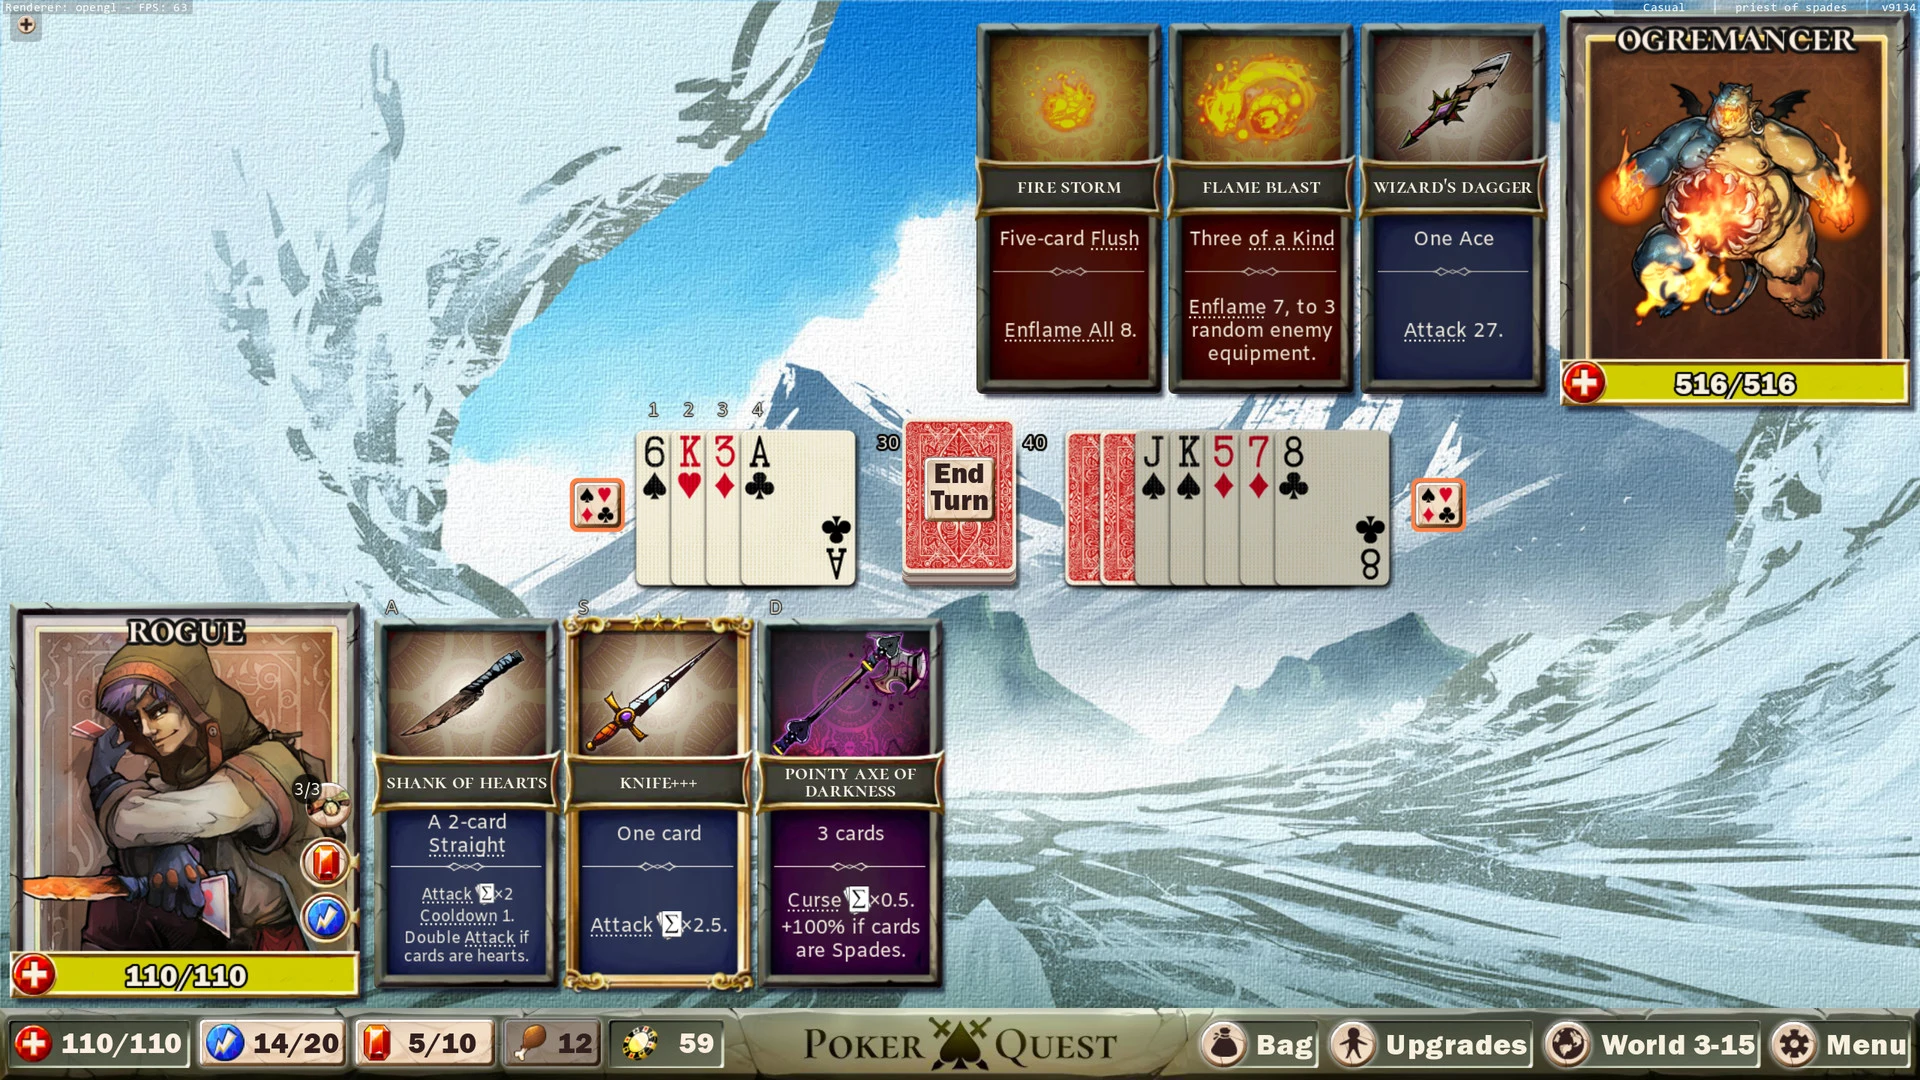 Poker Quest Screenshot of Battle with Rogue